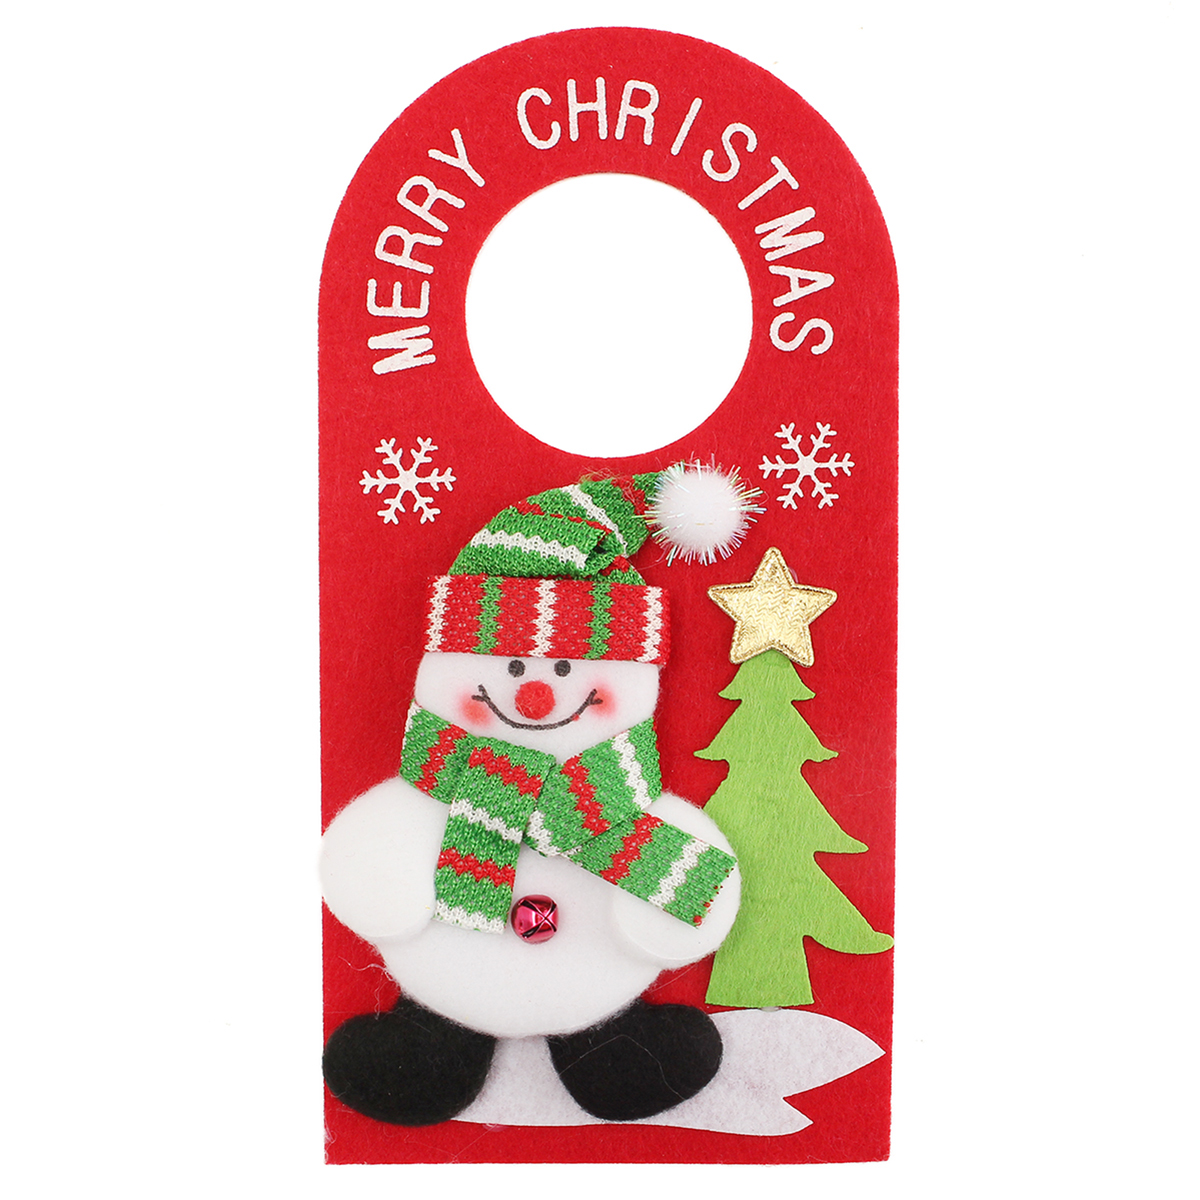 Applique-Style-Christmas-Decor-Beautiful-Detailed-Design-Padded-Felt-Door-Hanger-1106374-9